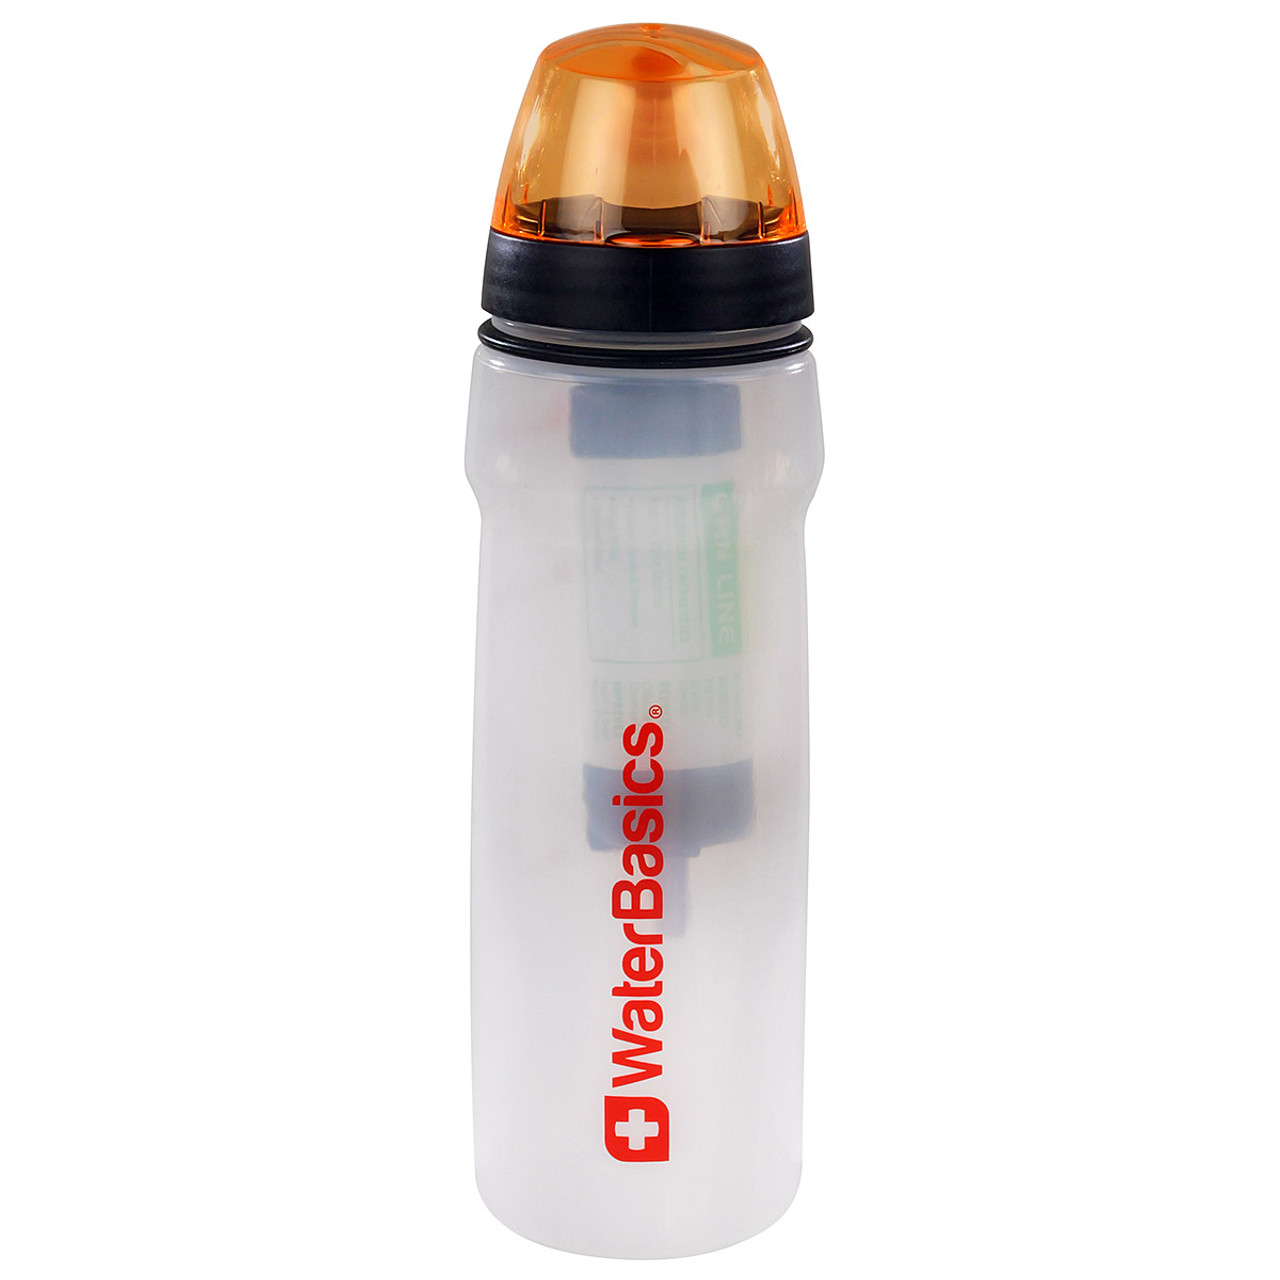 Seychelle 28oz Flip Top Advanced Filtration Bottle